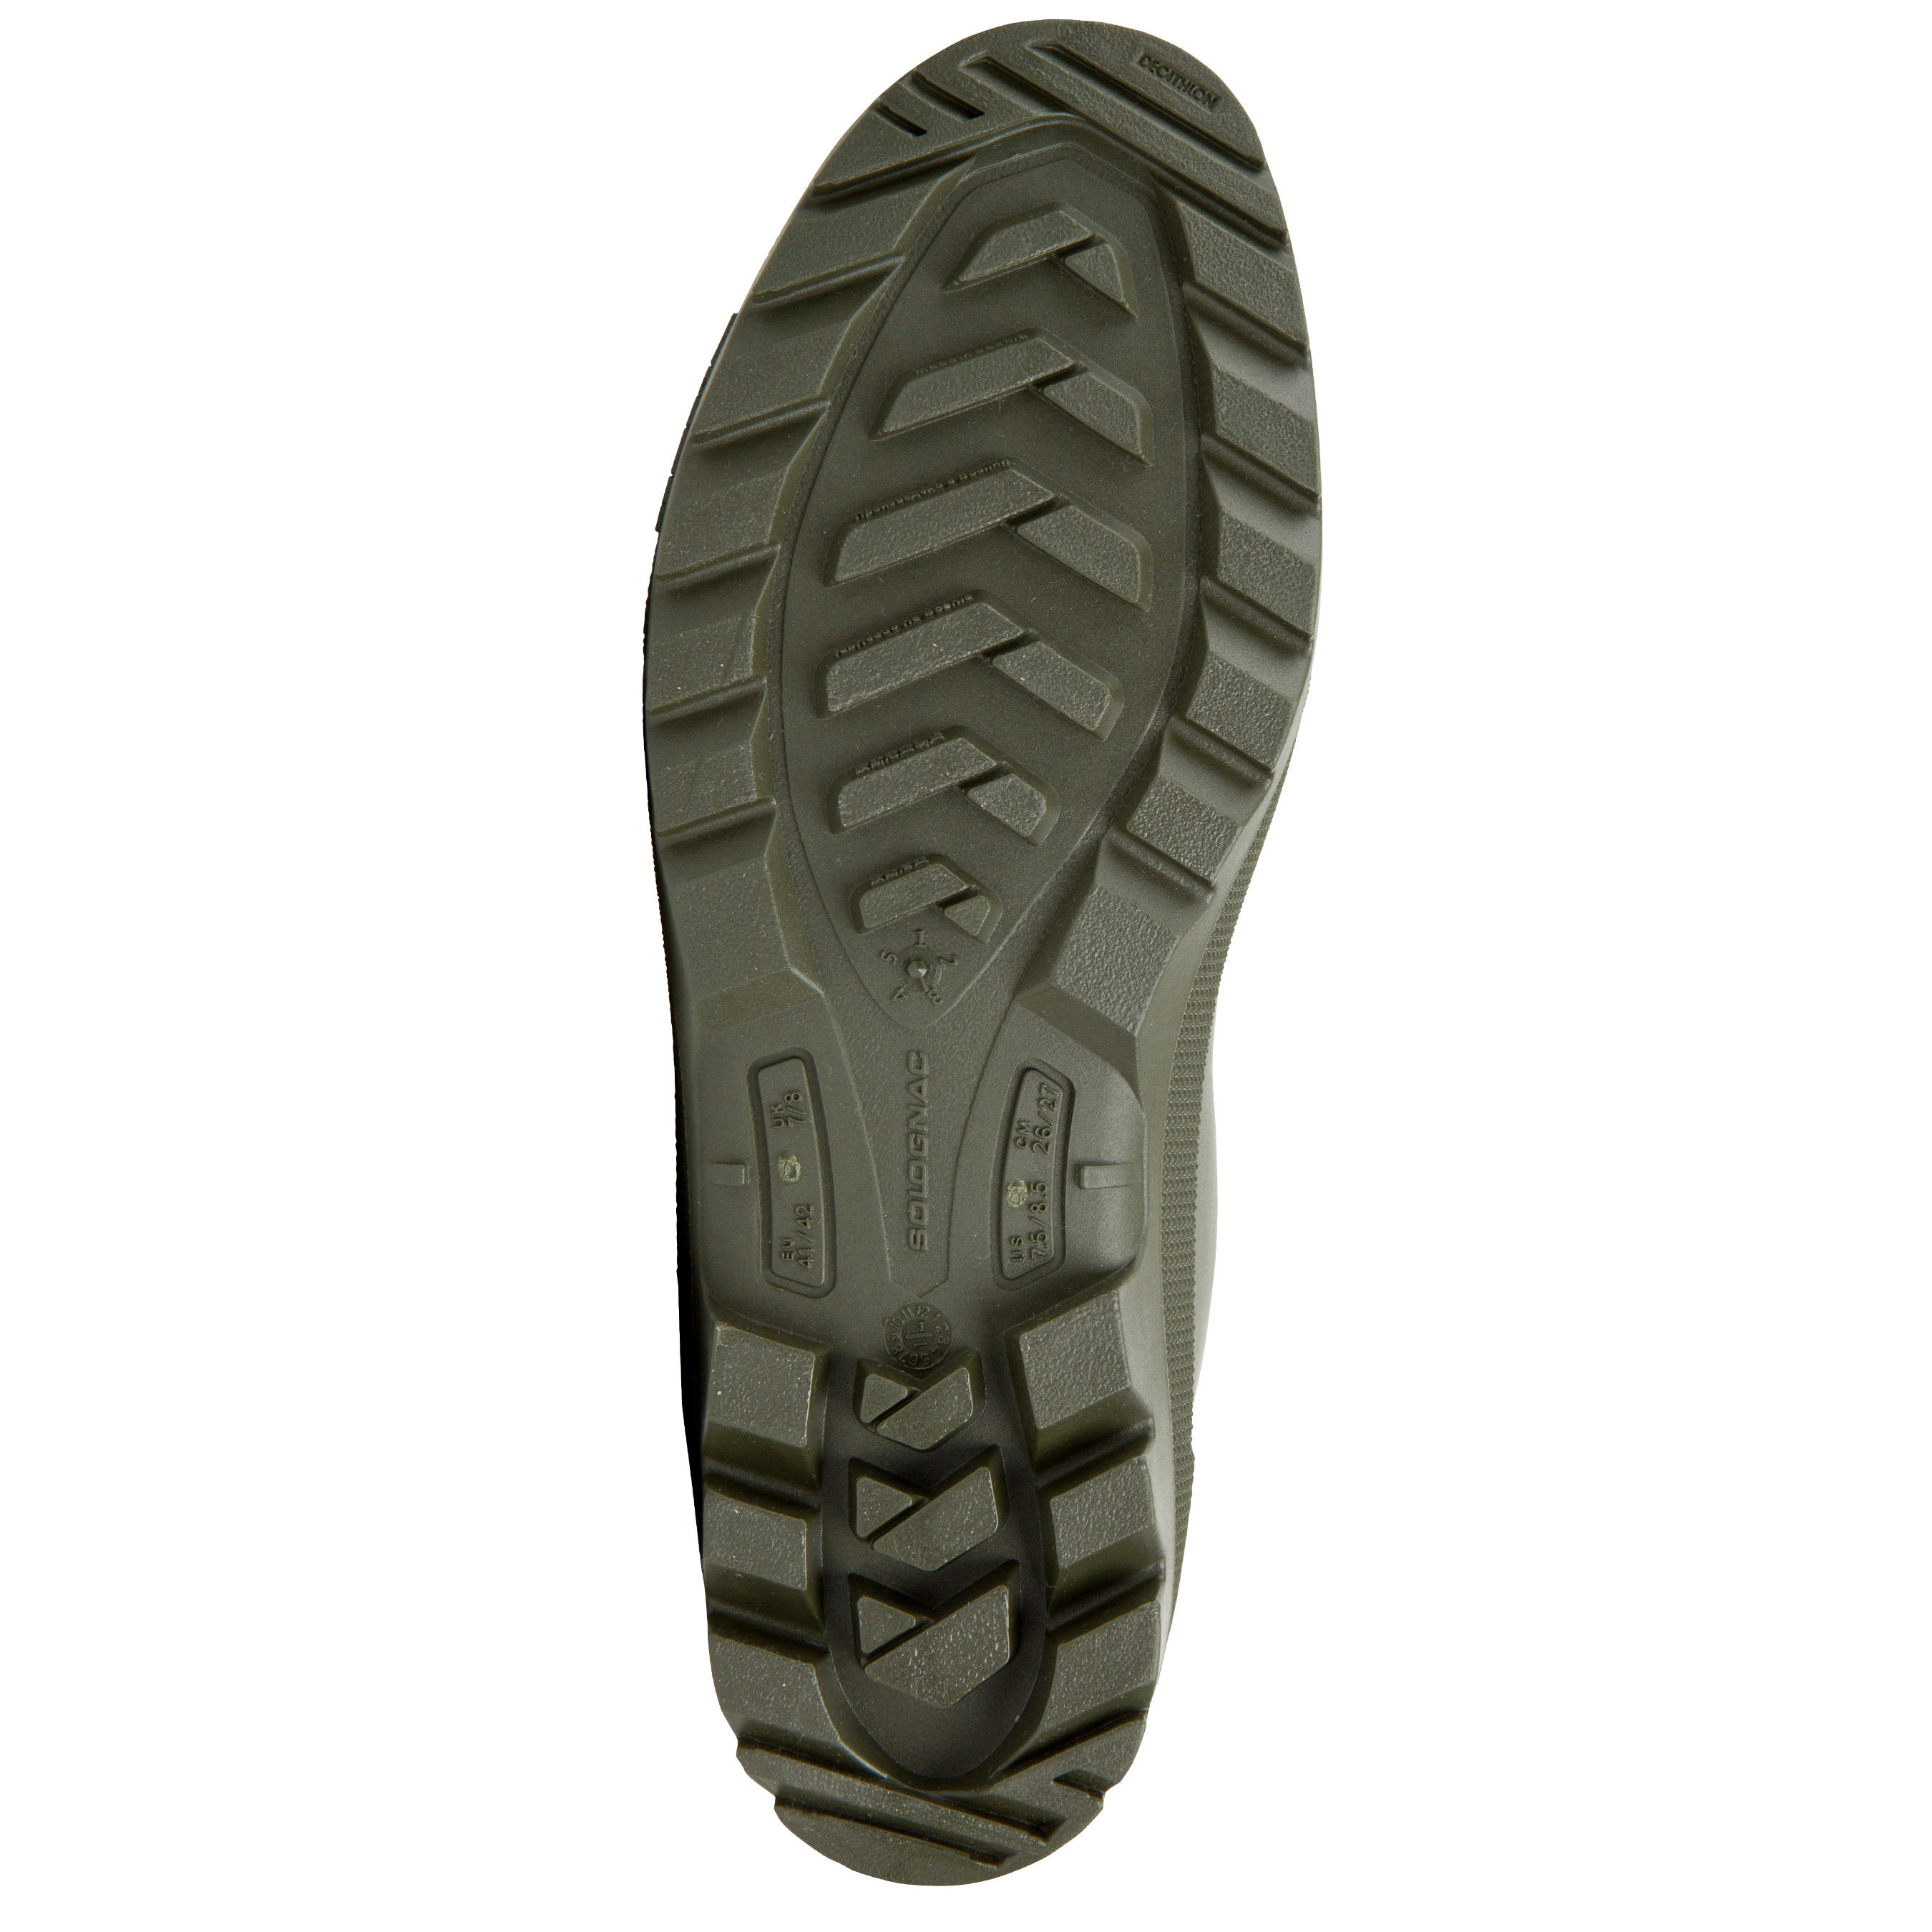 Hunting Rain Boots - PVC 100 - Black olive - Solognac - Decathlon